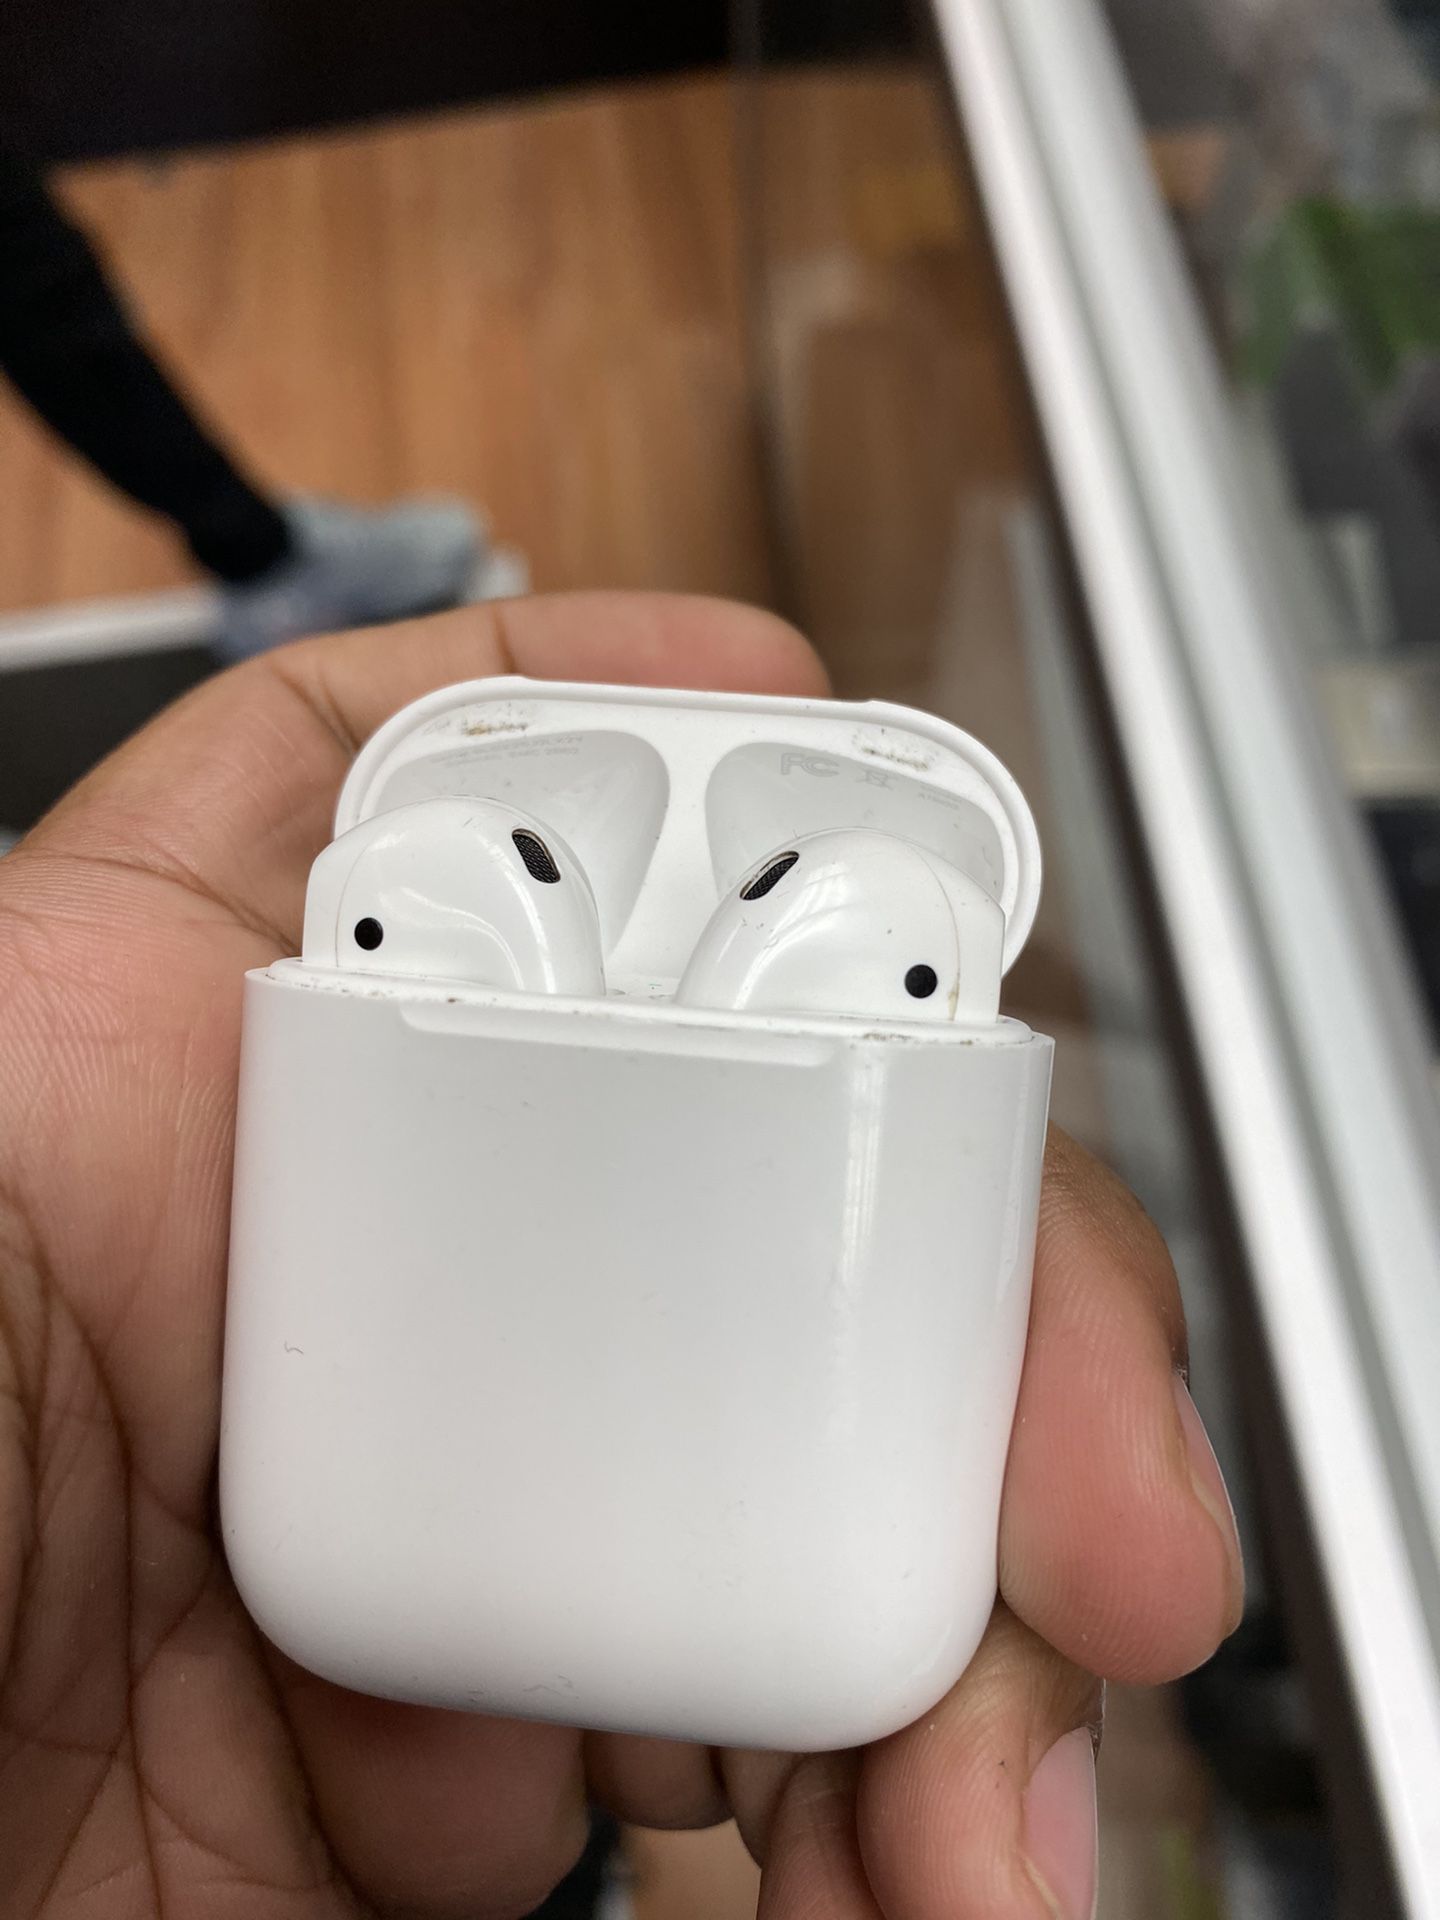 Apple AirPod wireless headphone